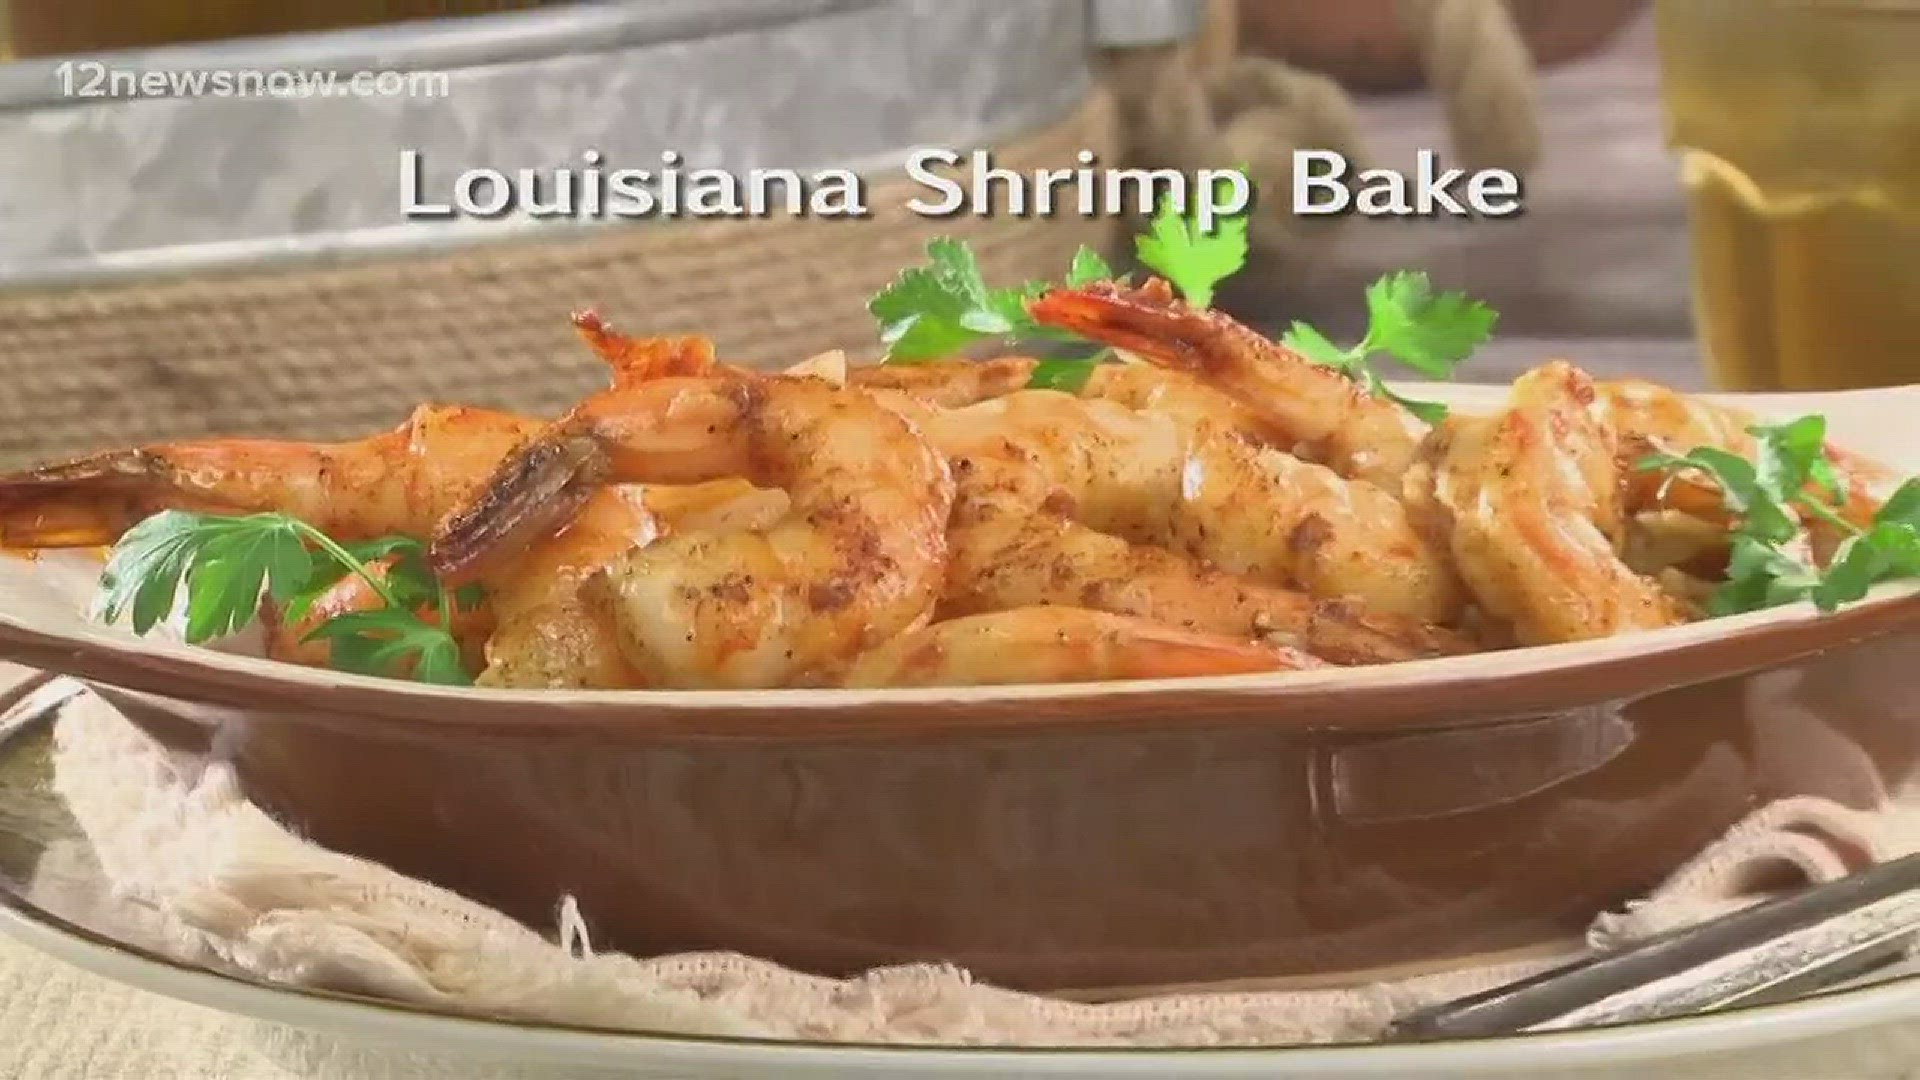 Mr. Food makes 'Louisiana Shrimp Bake'